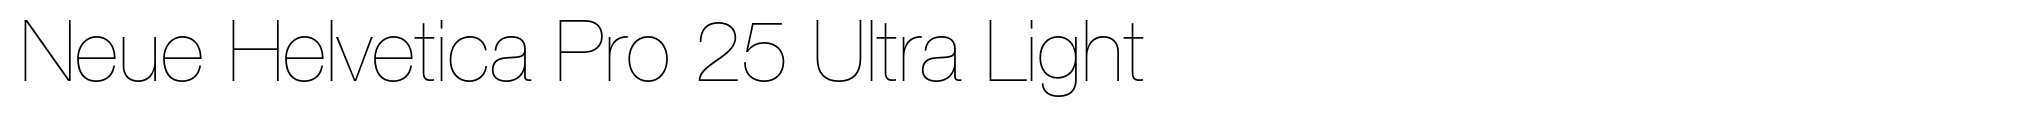 Neue Helvetica Pro 25 Ultra Light image